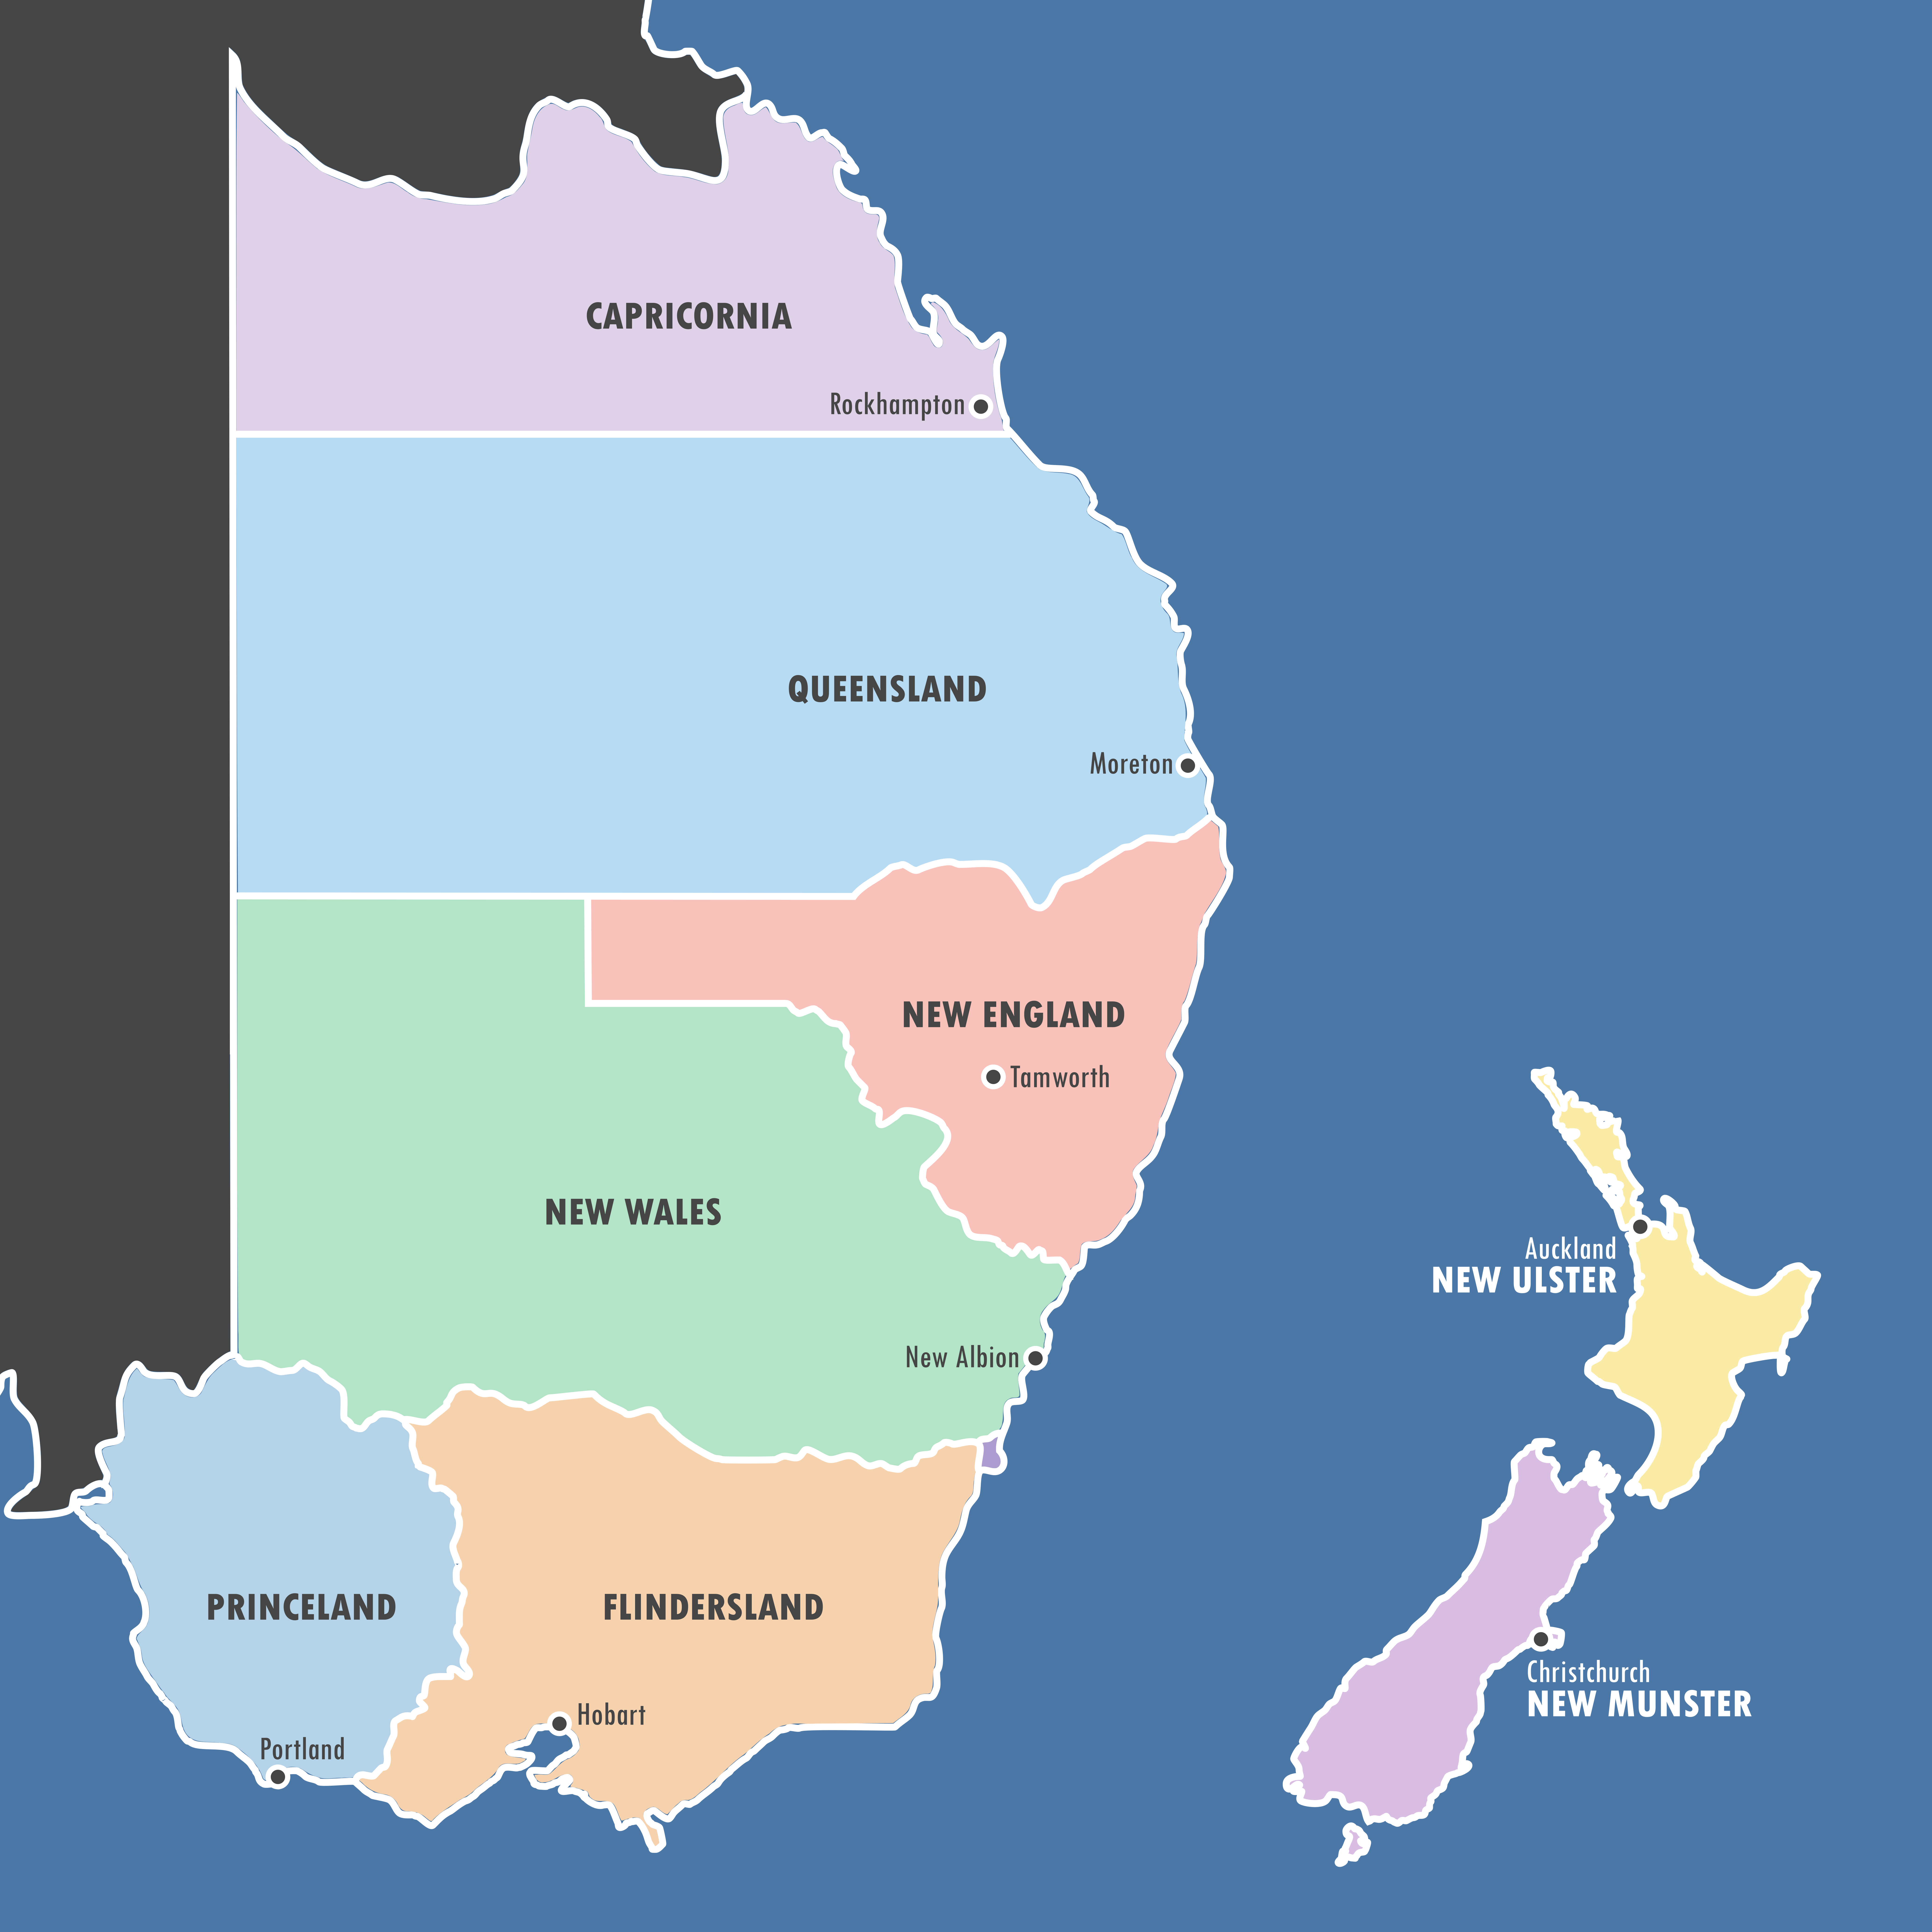 provinces_of_australasia_by_kaiseremu-dcsr5us.png